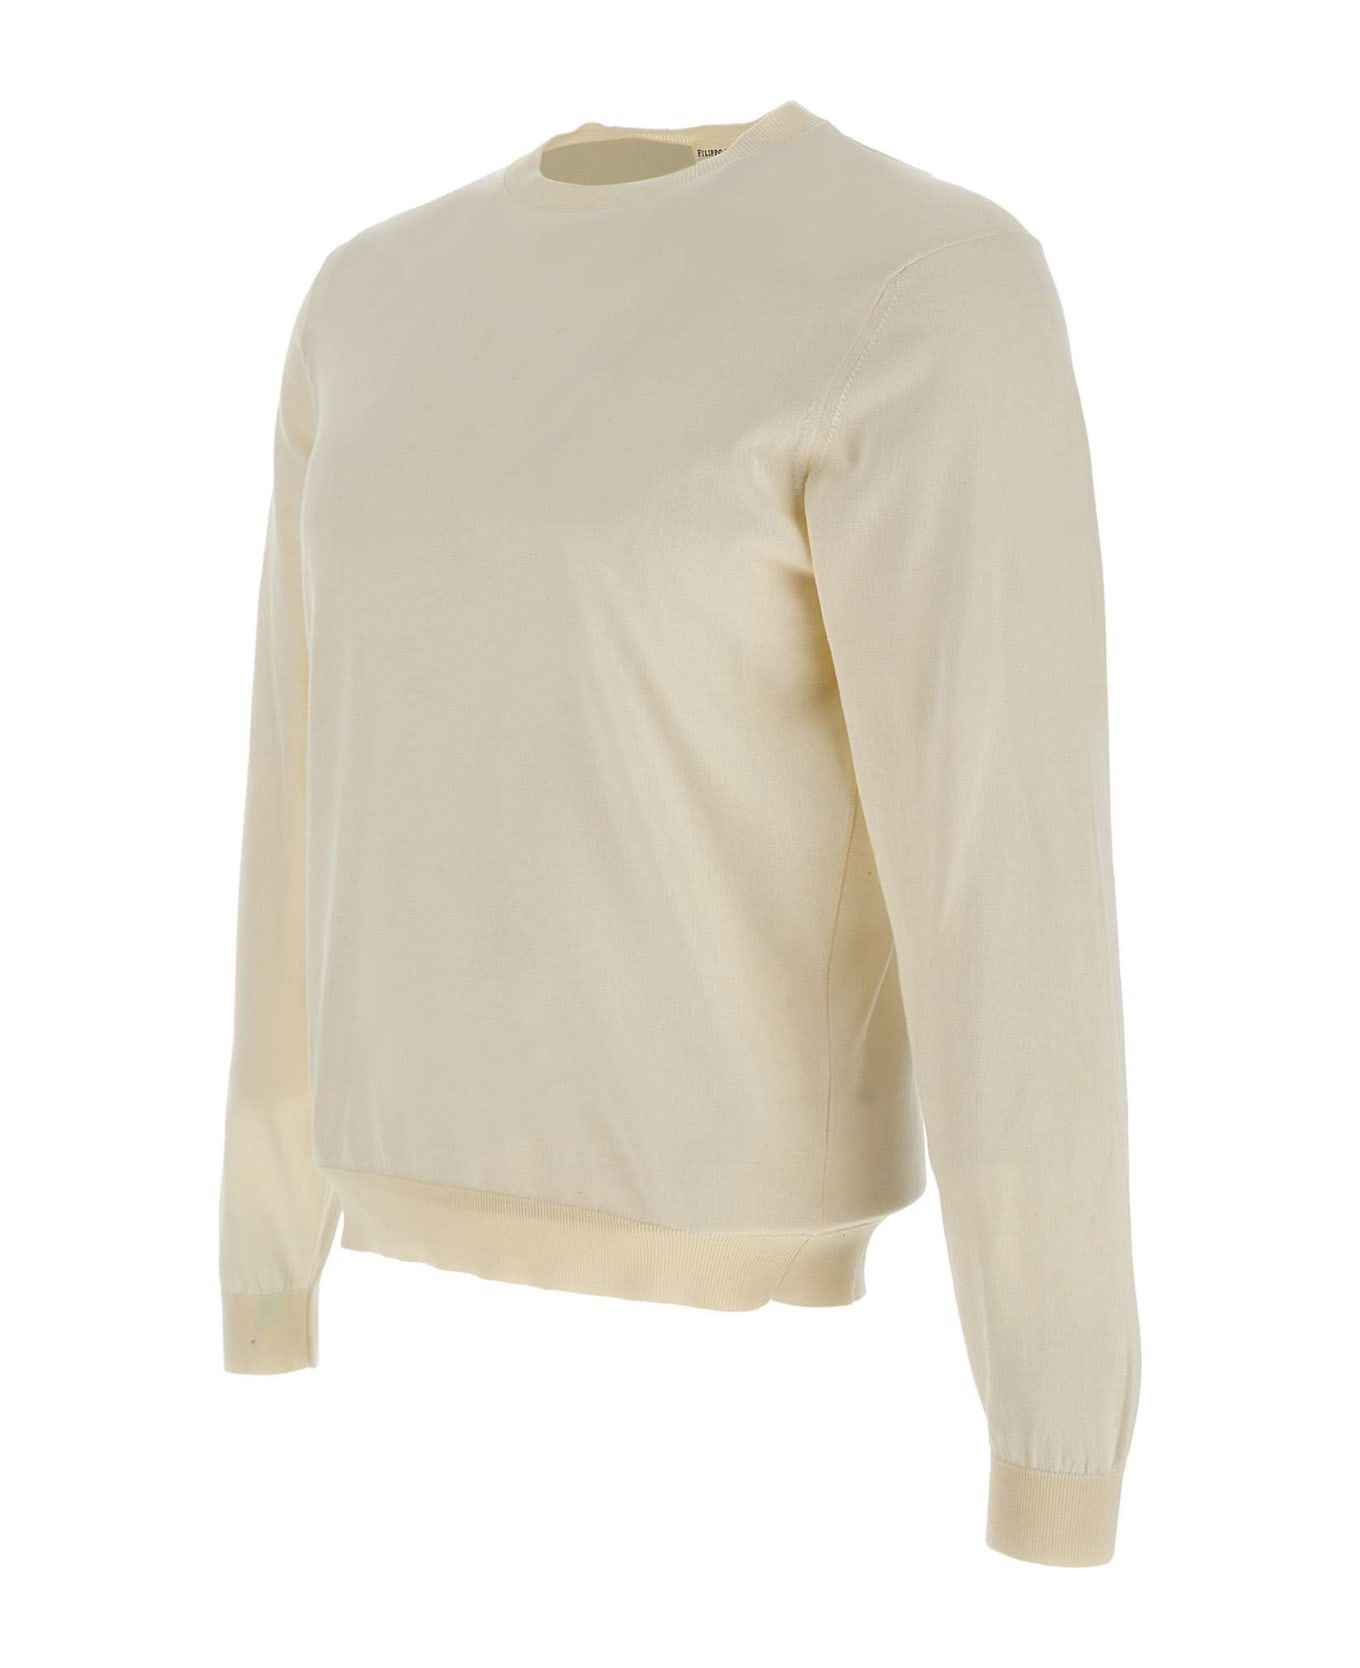 Filippo De Laurentiis Superlight Cotton Sweater - WHITE